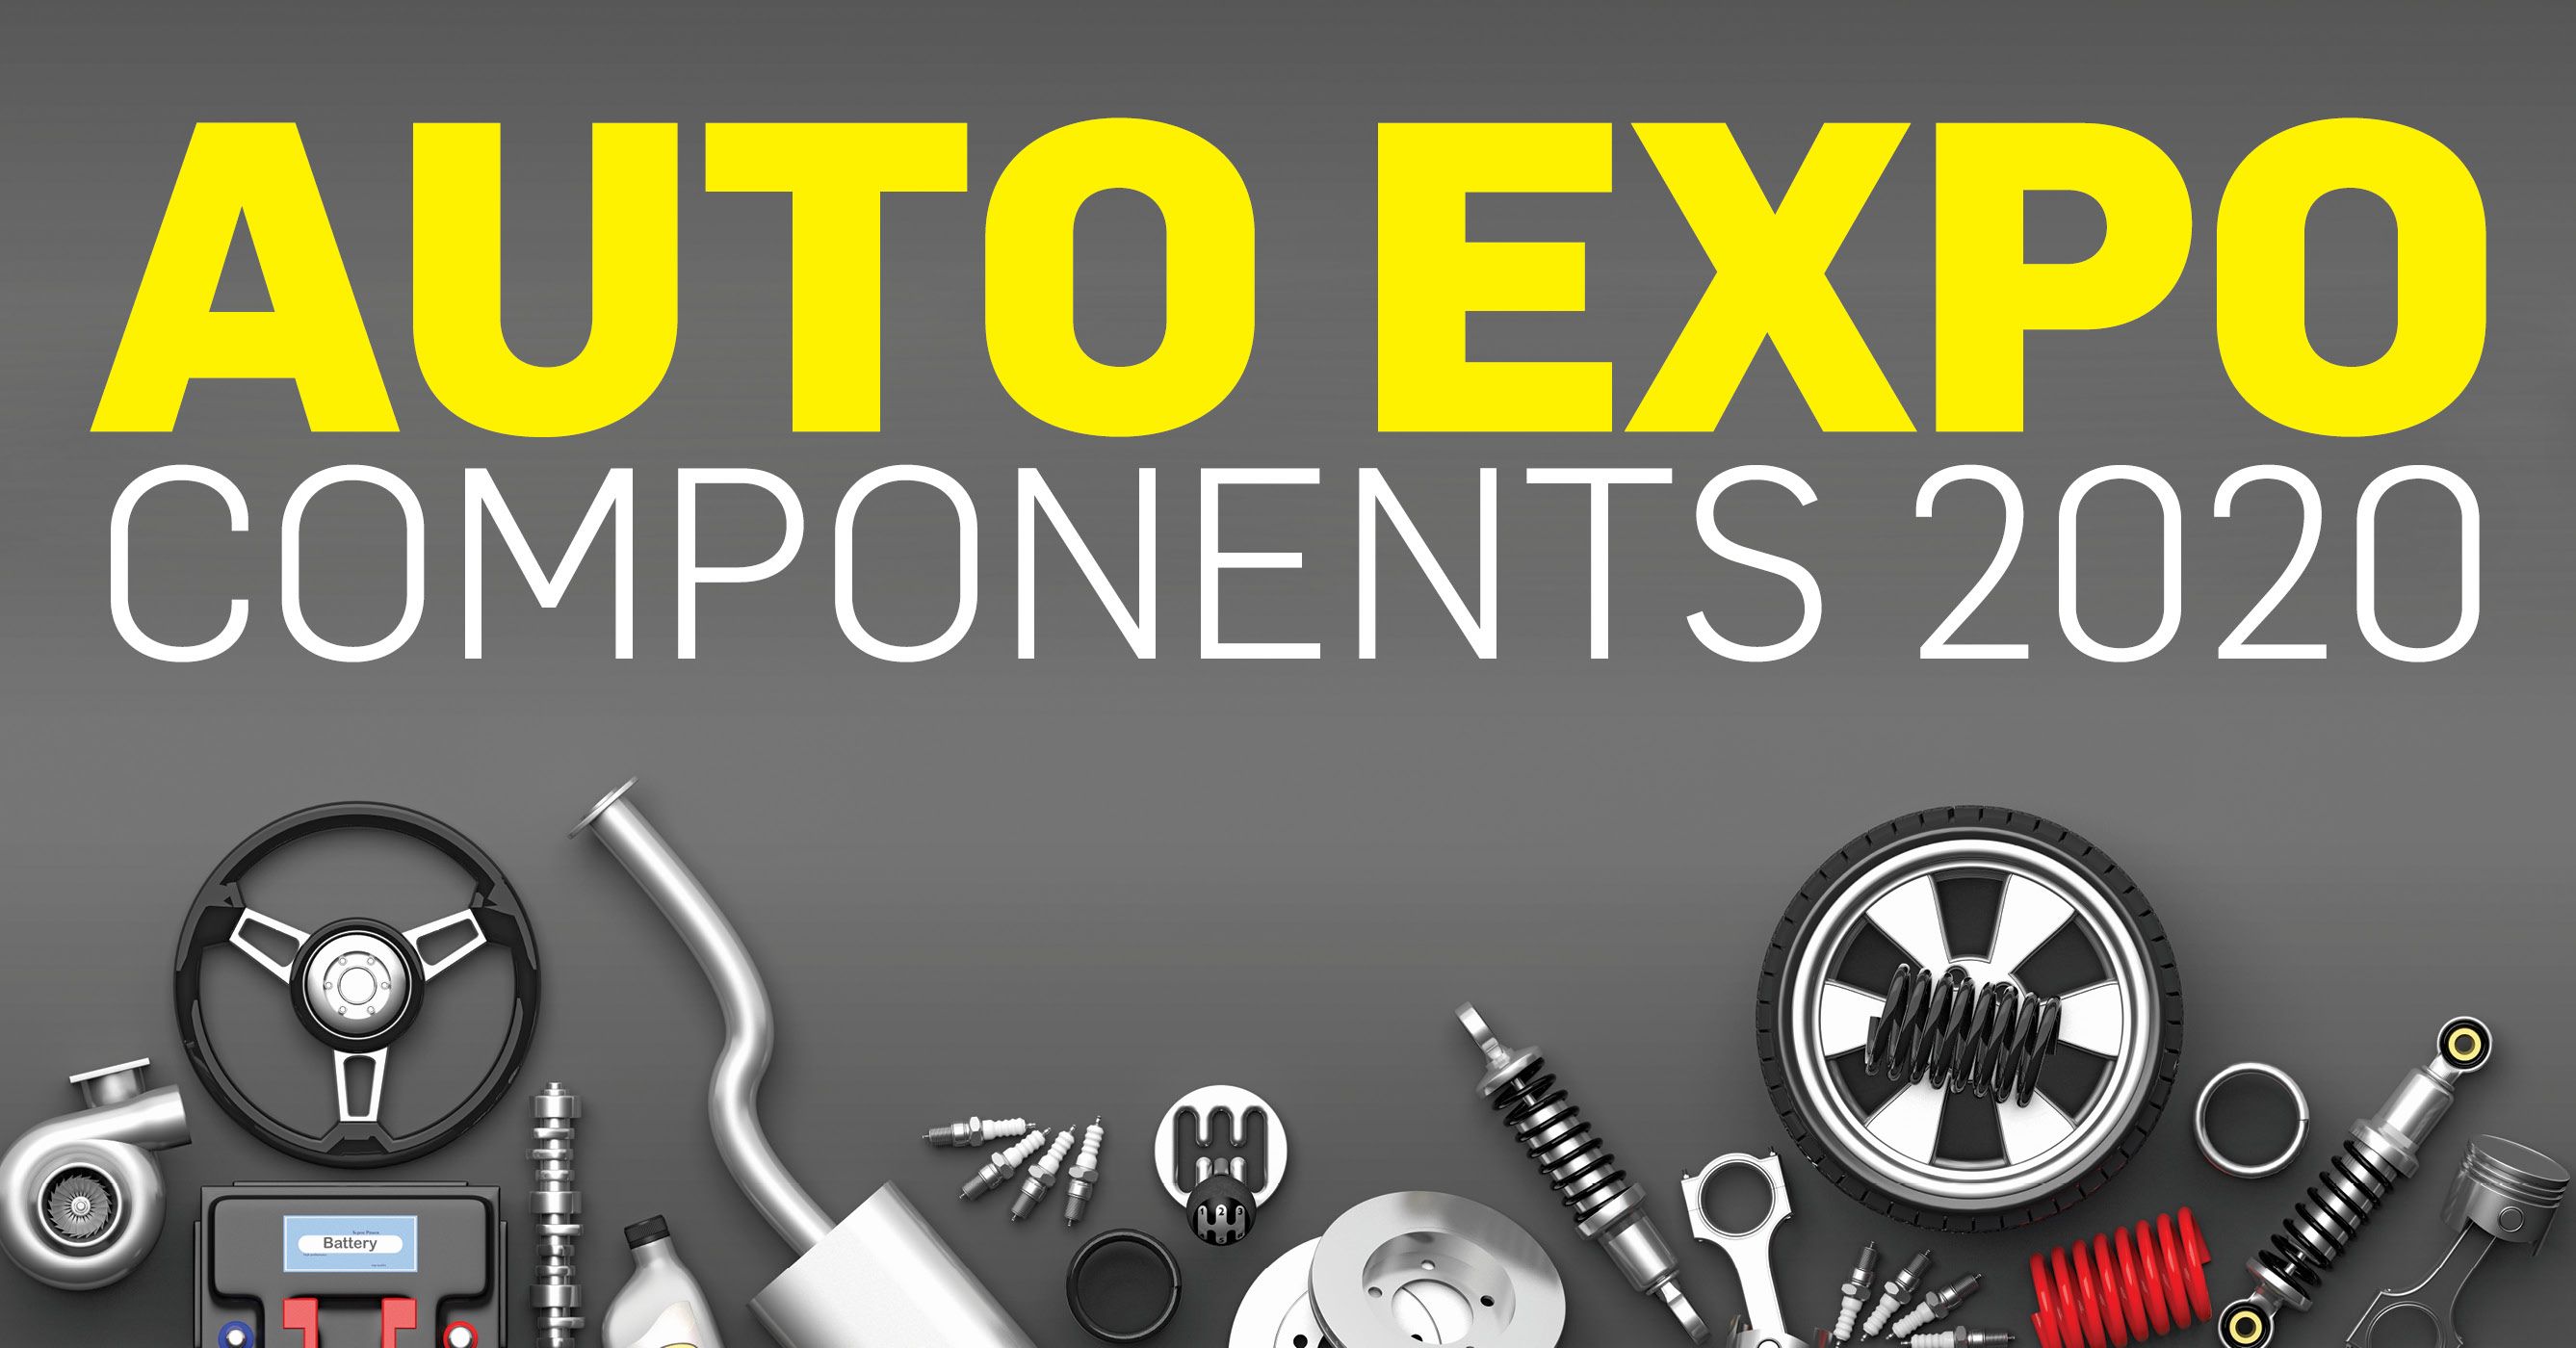 Auto Expo Components 2020